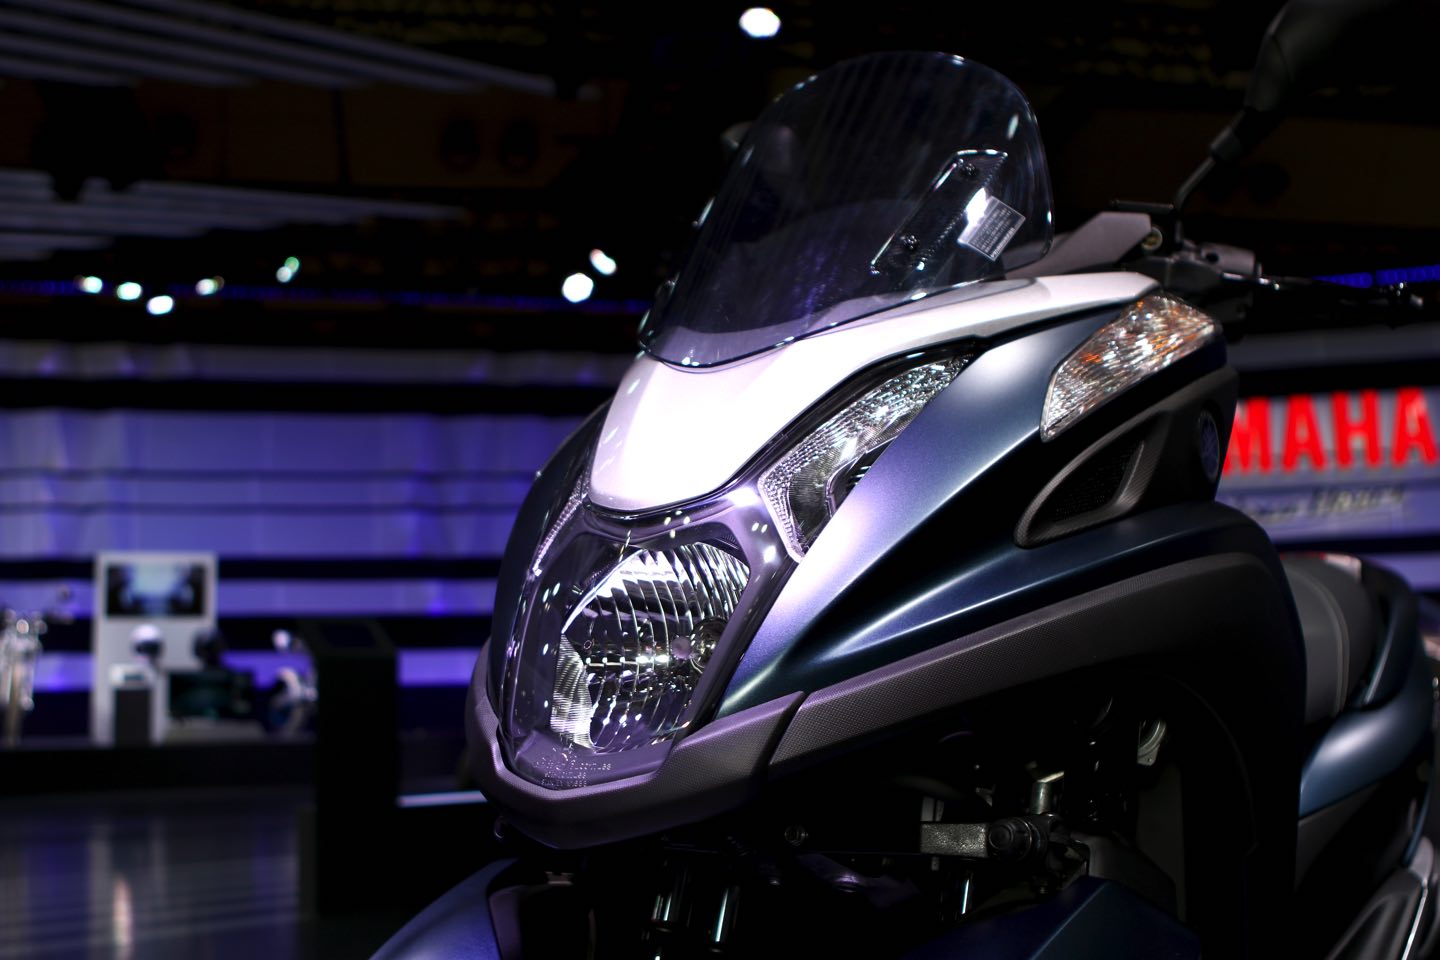 TRICITY 125｜Tokyo Motor Show 2015 - Event | YAMAHA MOTOR CO., LTD.